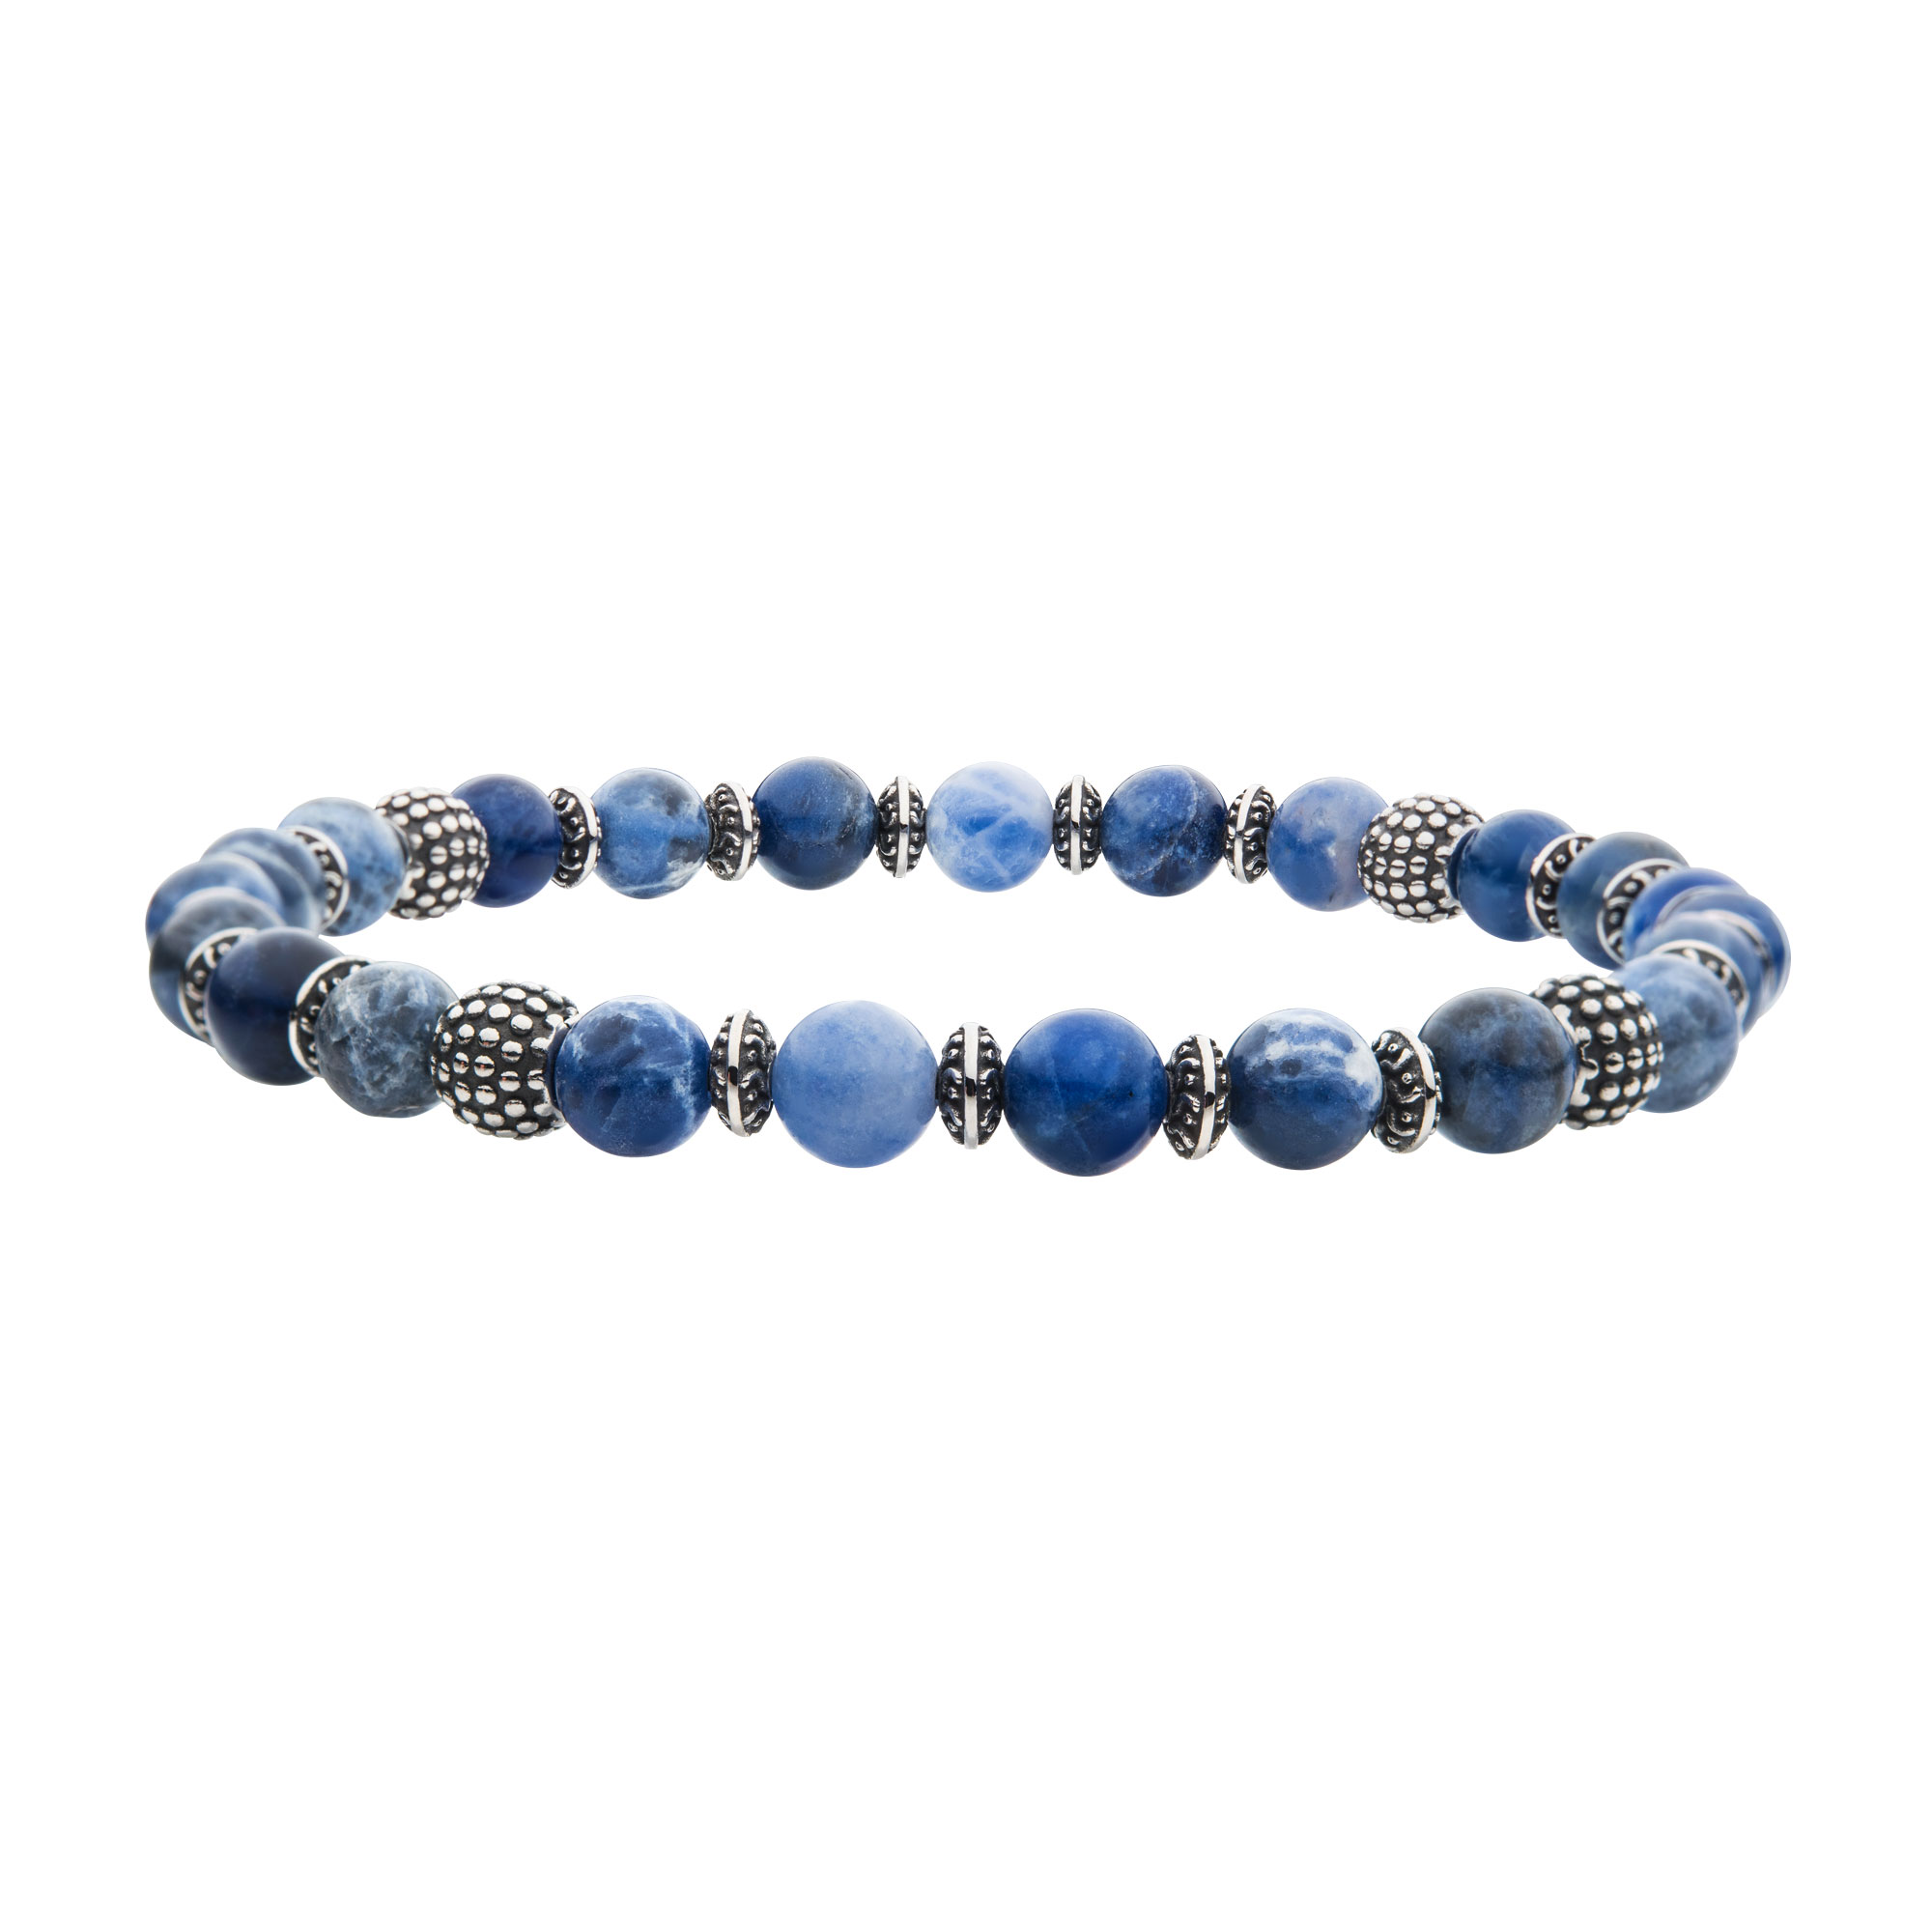 Blue Sodalite Stones with Black Oxidized Beads Bracelet Jayson Jewelers Cape Girardeau, MO